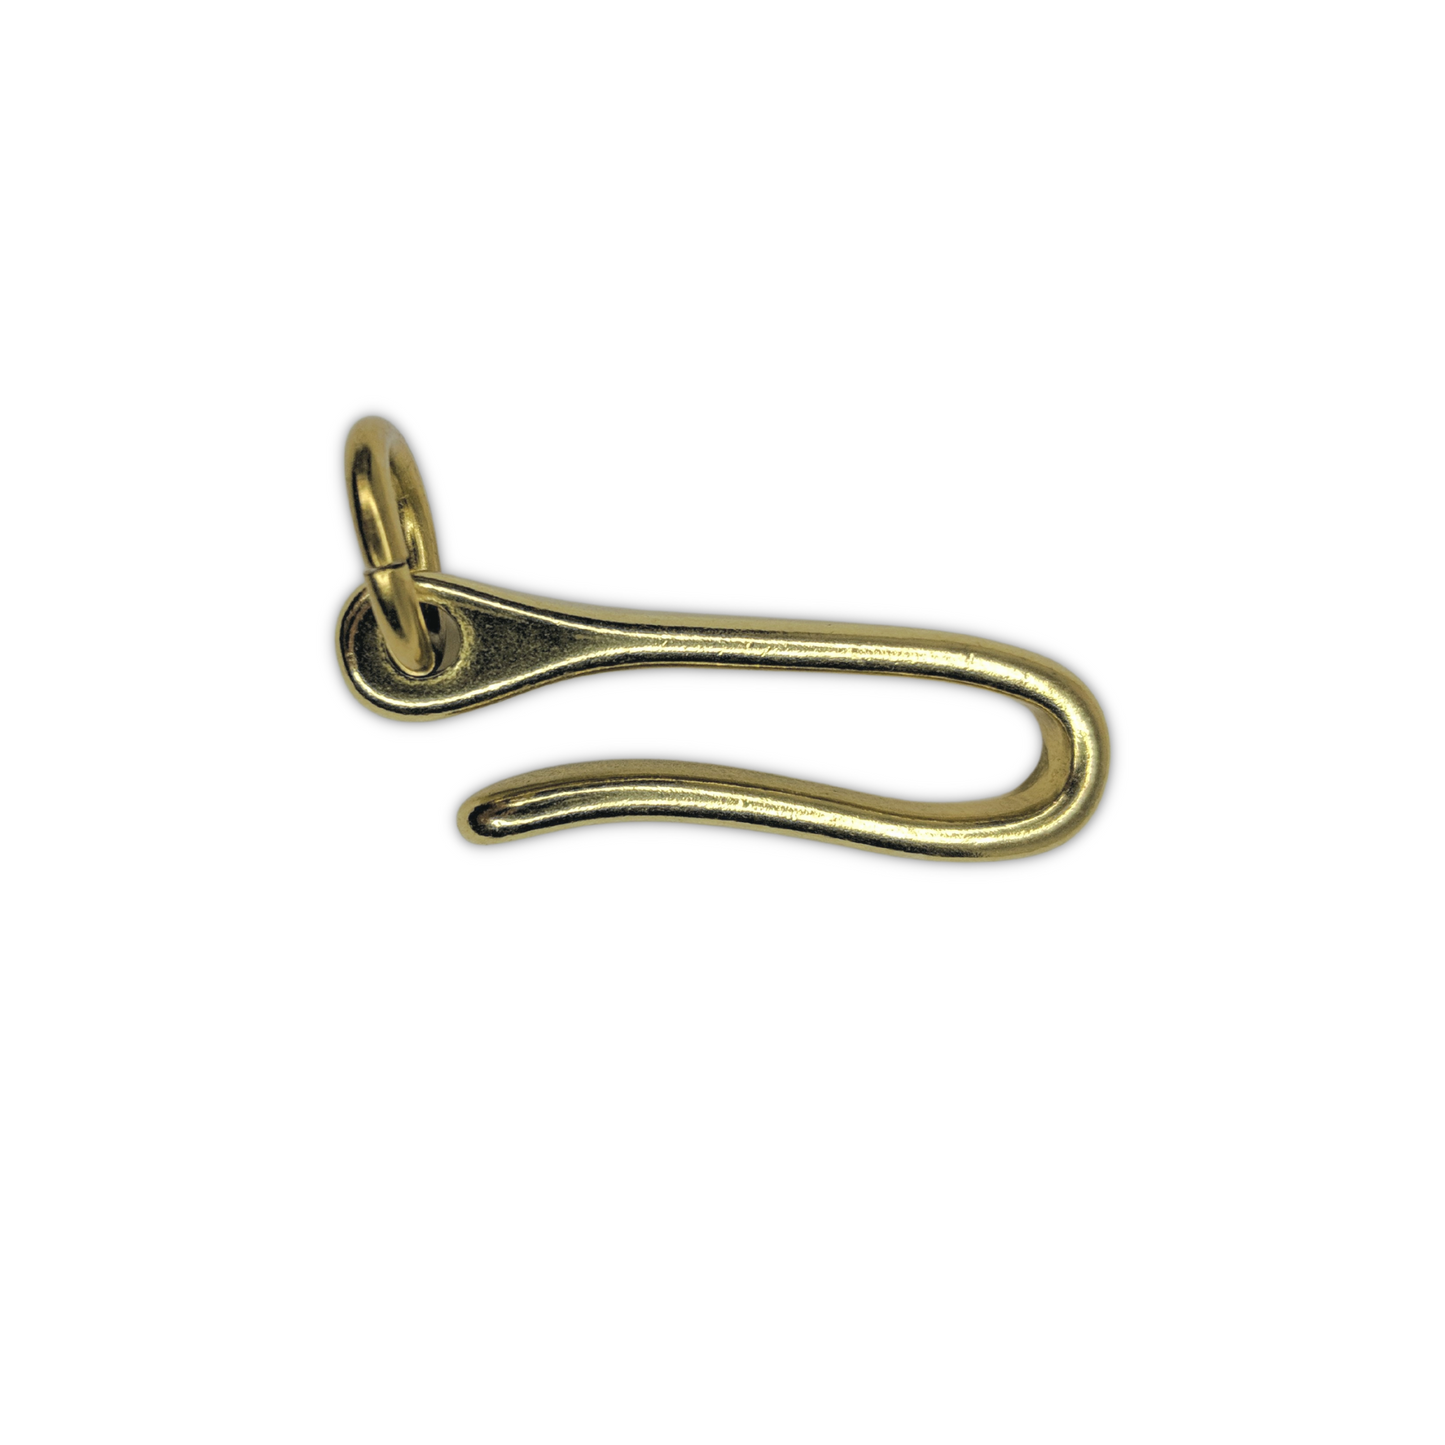 Solid Brass Japanese Fish Hook Keychain